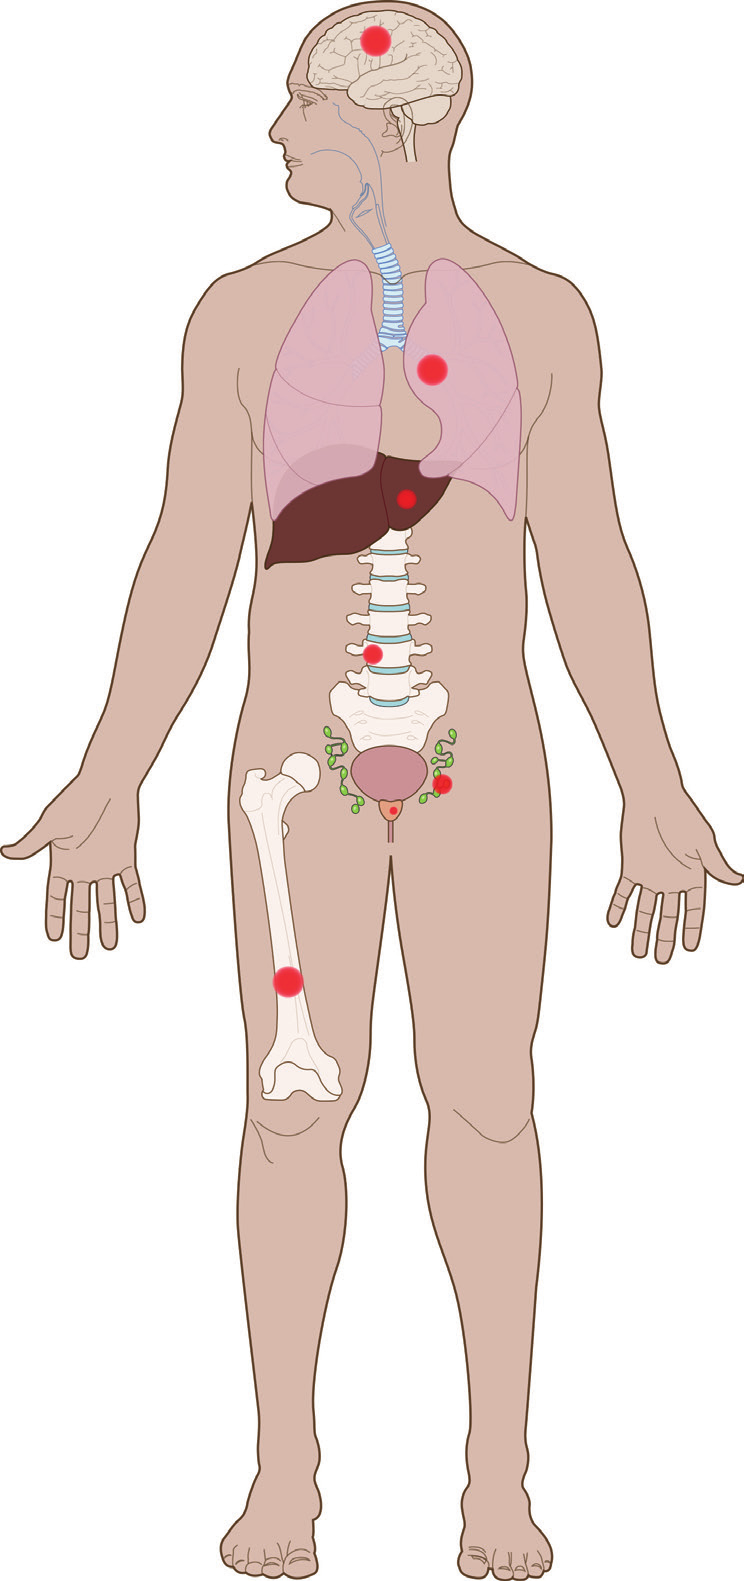 Hirnmetastase Lungenmetastase Lebermetastase Wirbelsäulenmetastase Beckenlymphknoten Prostatatumor Knochenmetastase Abb.